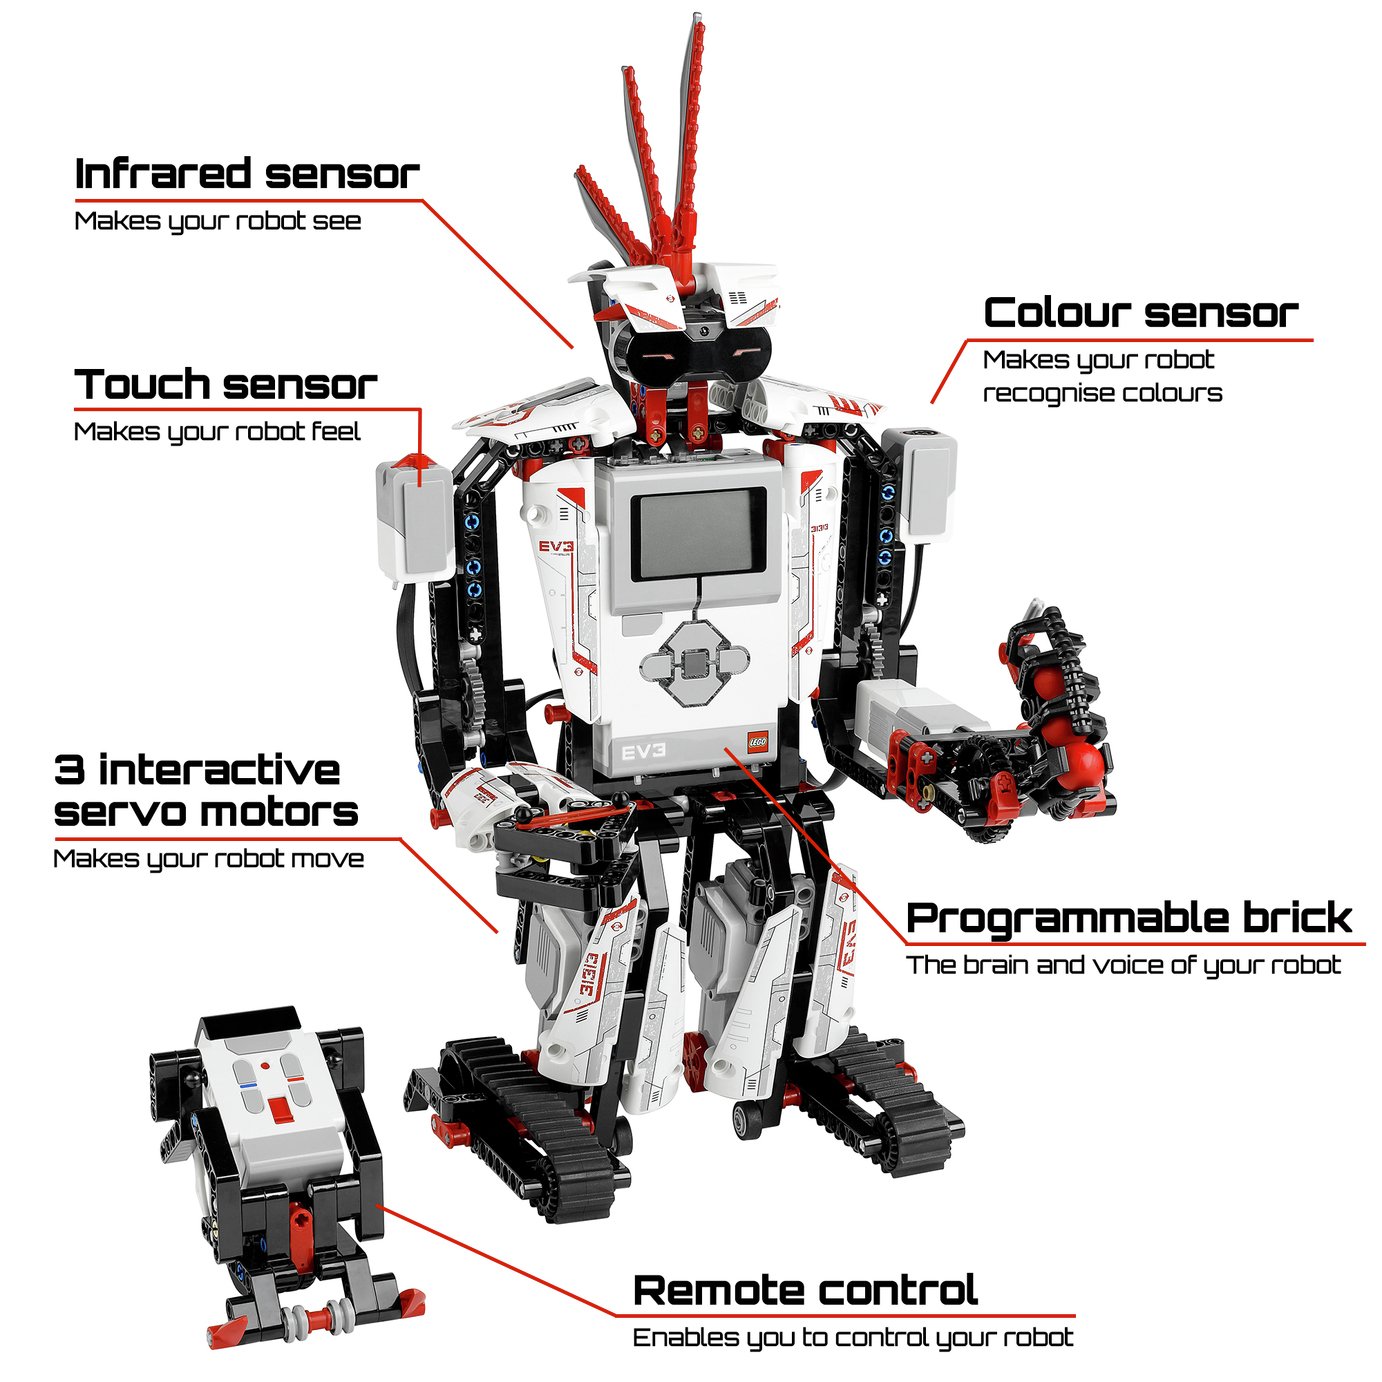 LEGO MINDSTORMS EV3 Toy Robot Building Kit Review